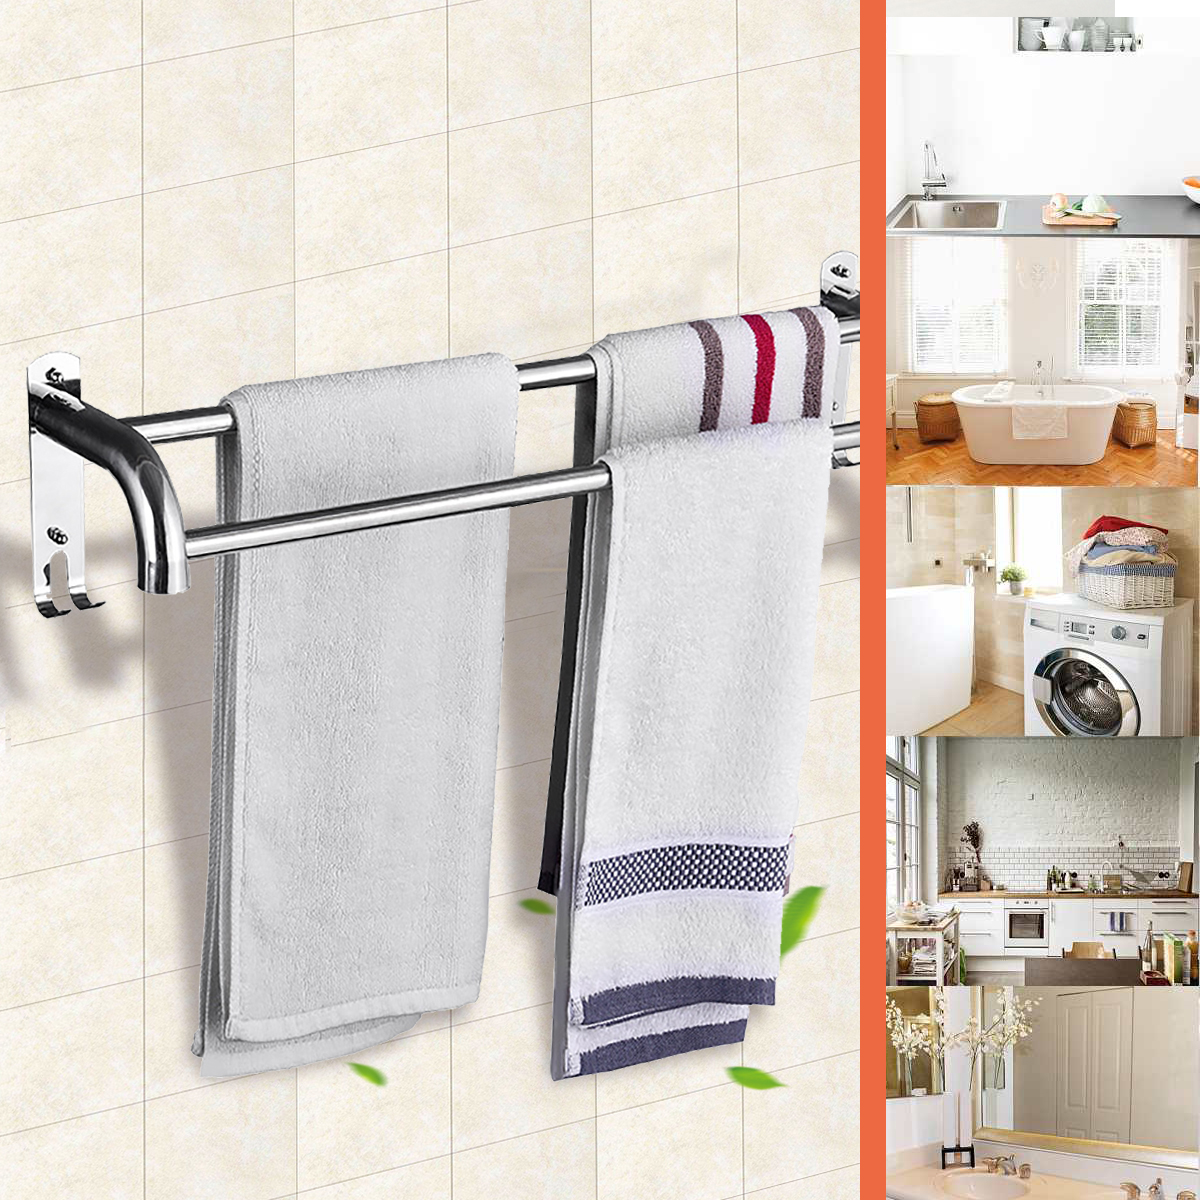 50cm-Stainless-Steel-Bath-Shelf-Wall-Mounted-Towel-Rail-Rack-Single-Double-Shelf-for-Bathroom-Storag-1838127-1